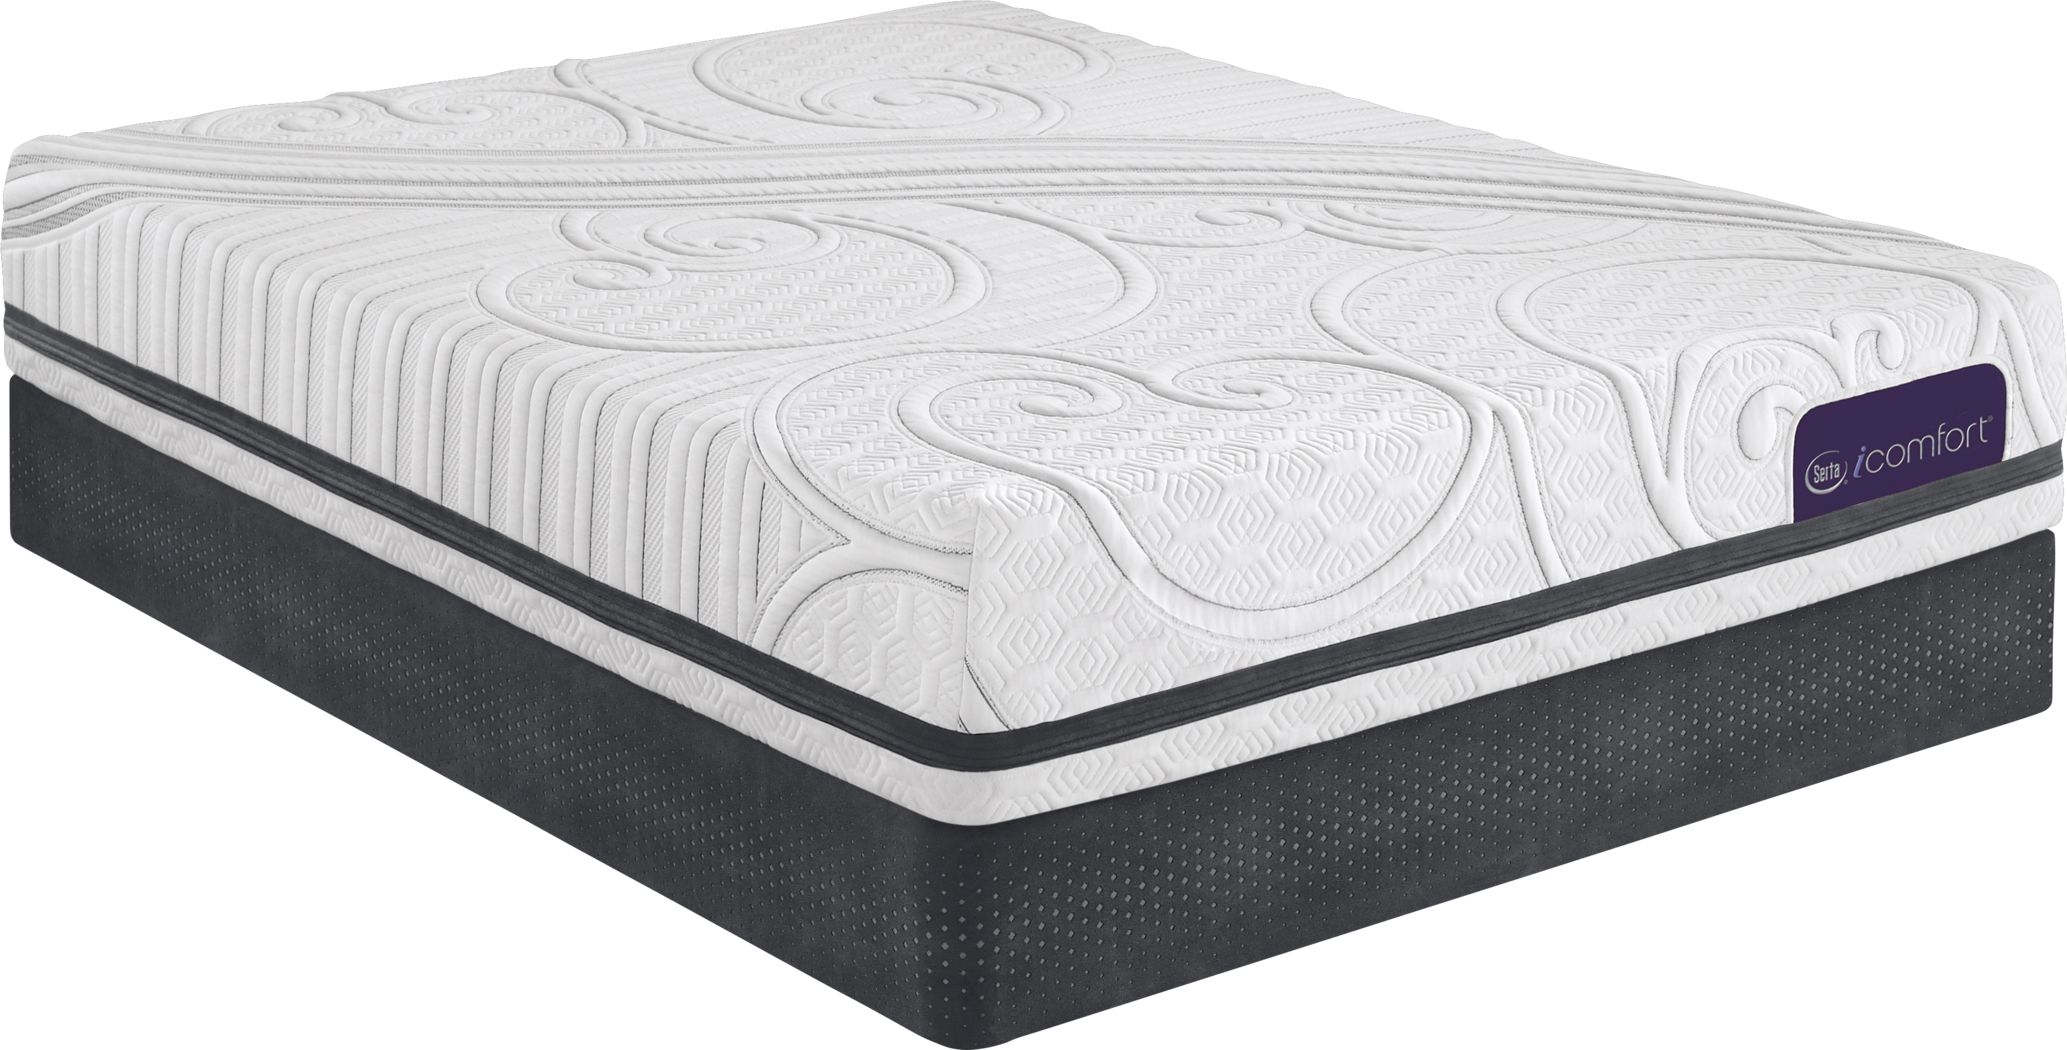 savant iii plush mattress set